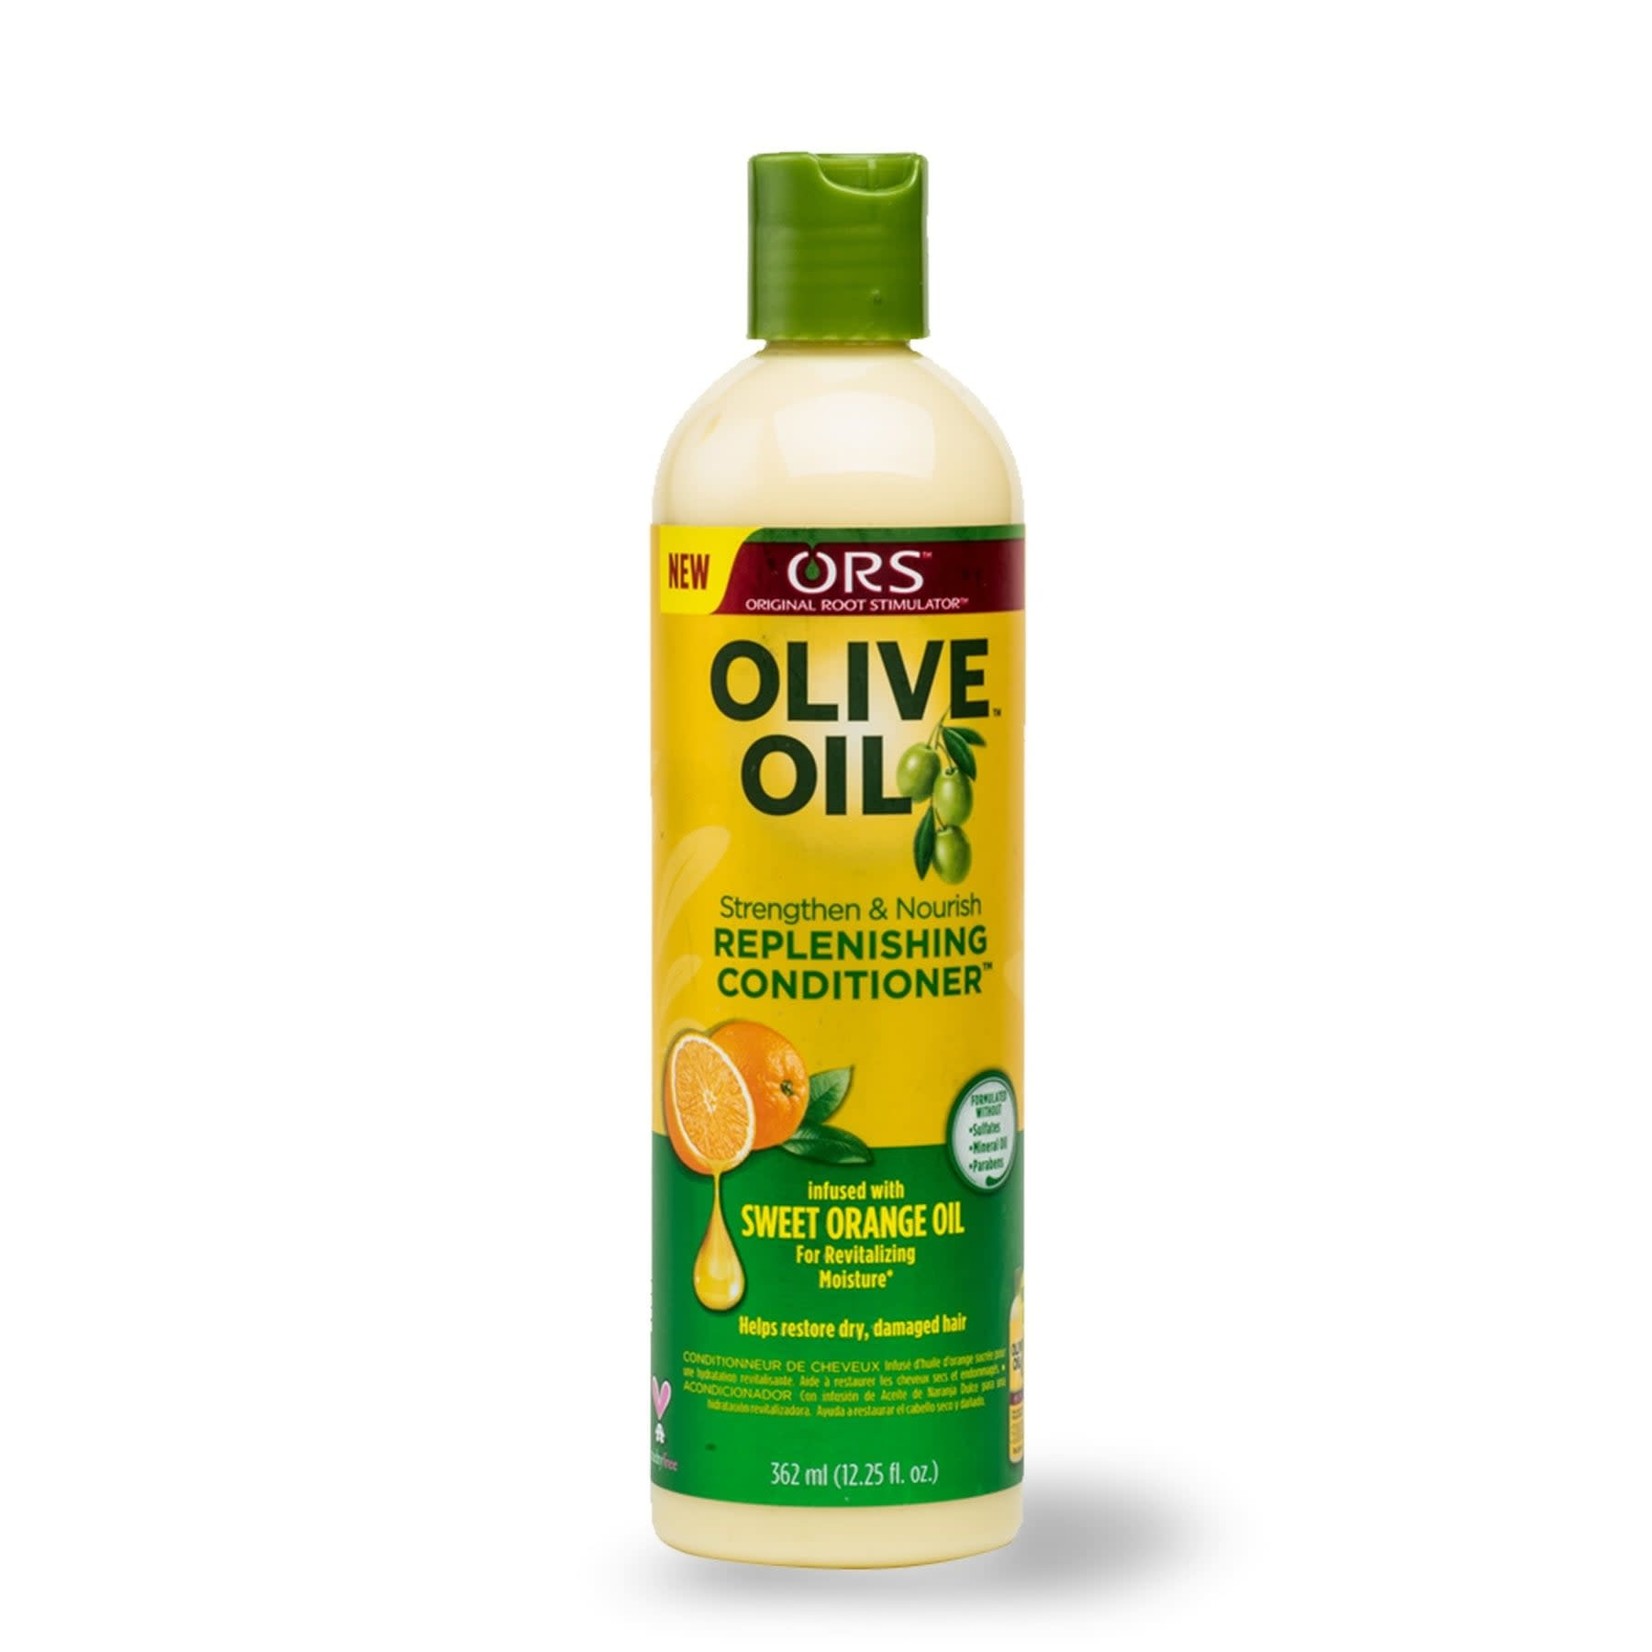 ORS Replenishing Conditioner Sweet Orange Oil